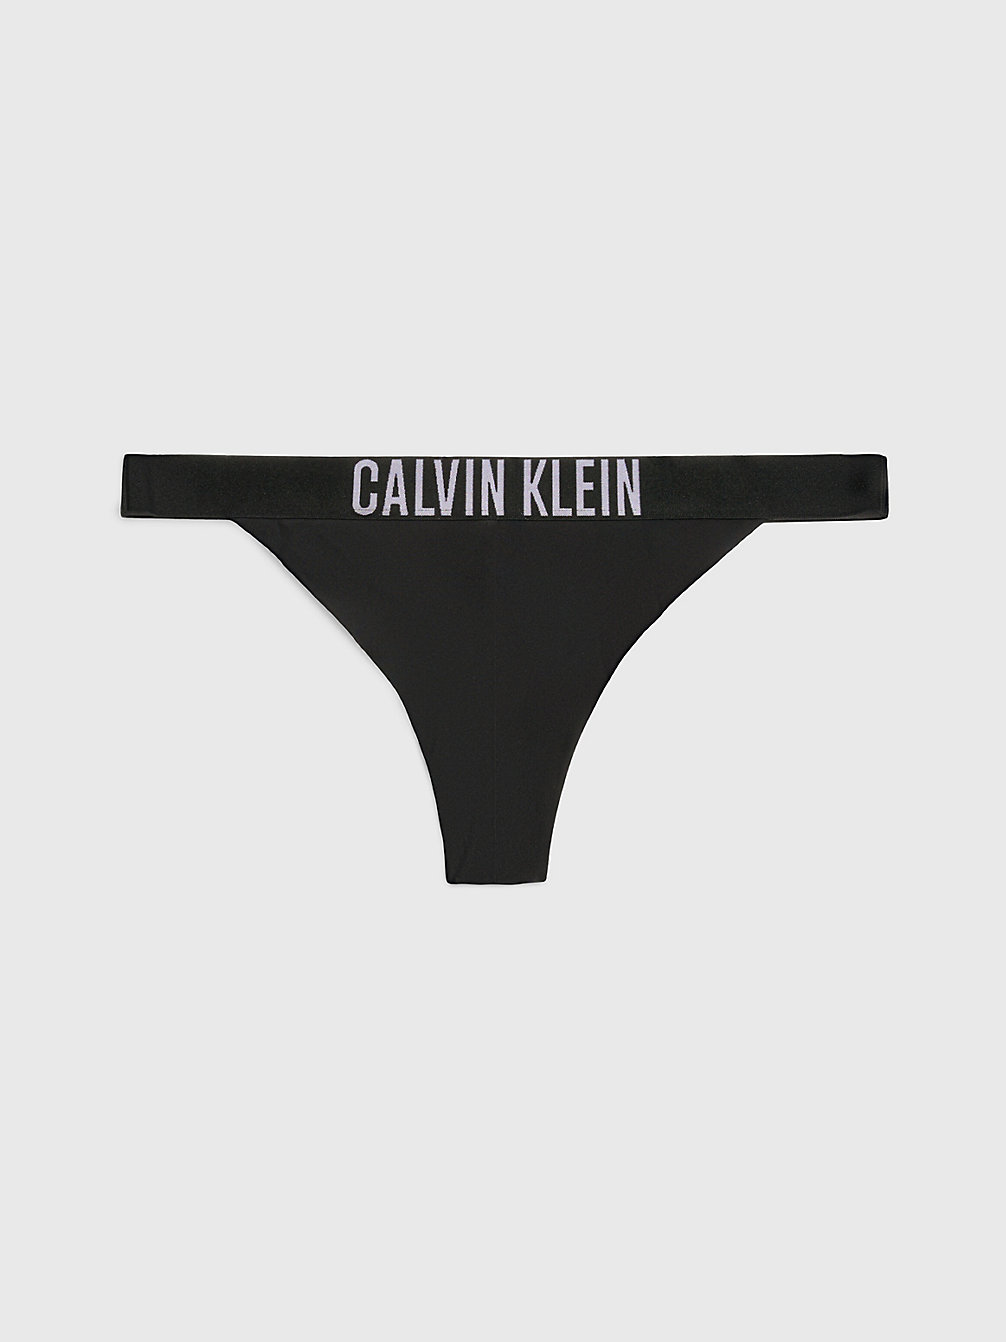 PVH BLACK Bas De Bikini Brésilien - Intense Power undefined femmes Calvin Klein